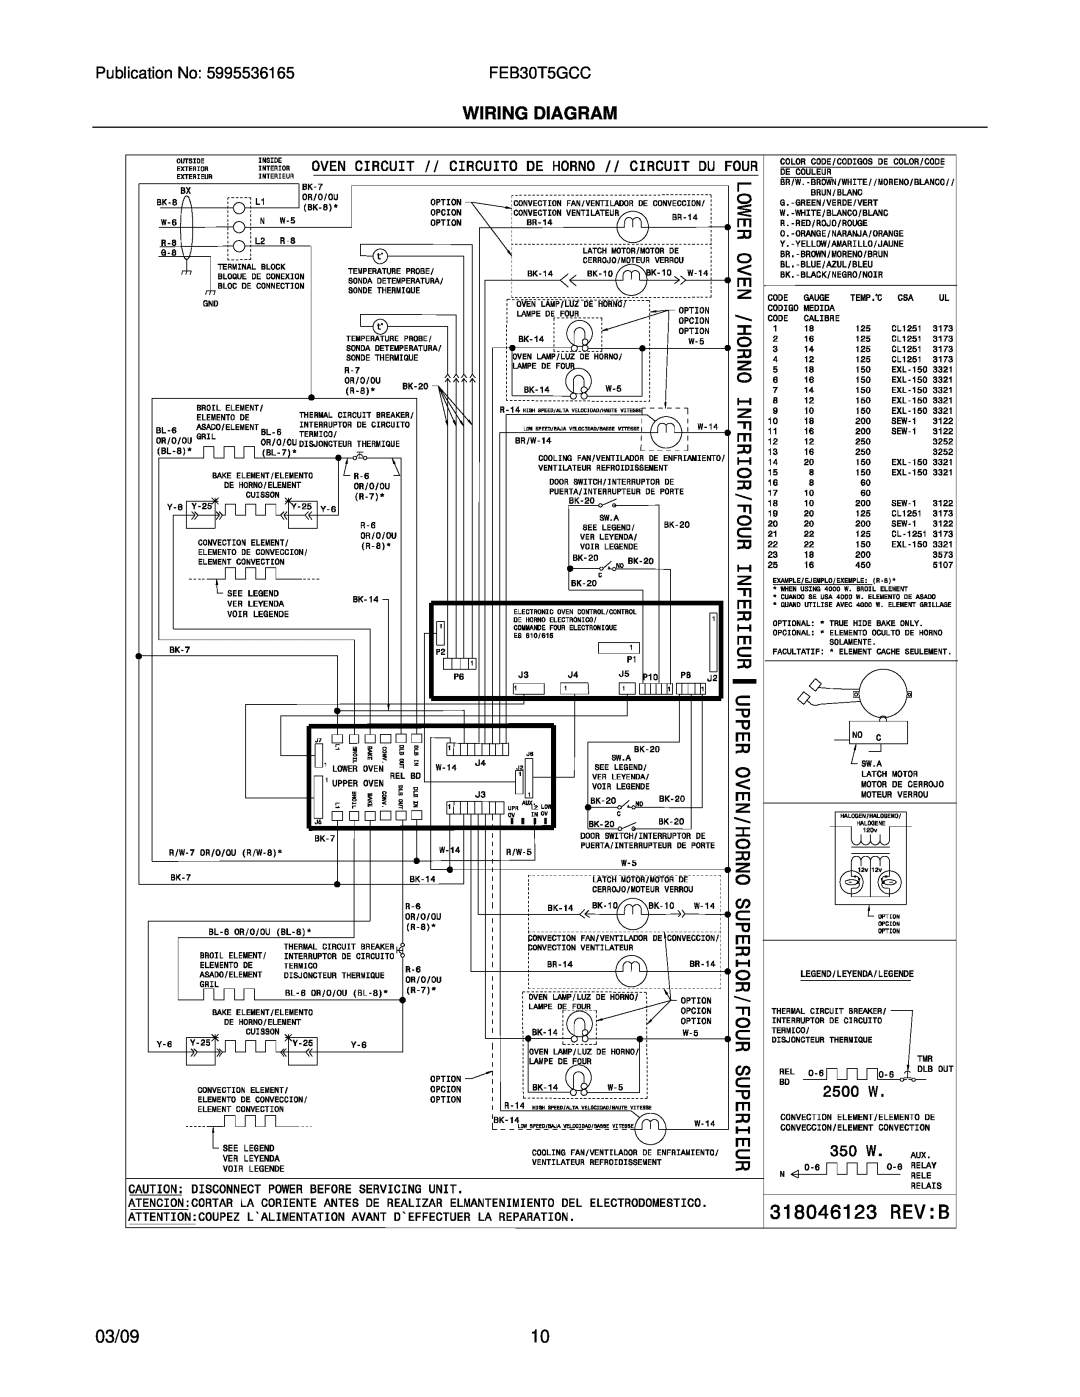 Frigidaire FEB30T5GCC installation instructions Wiring Diagram, 03/09 